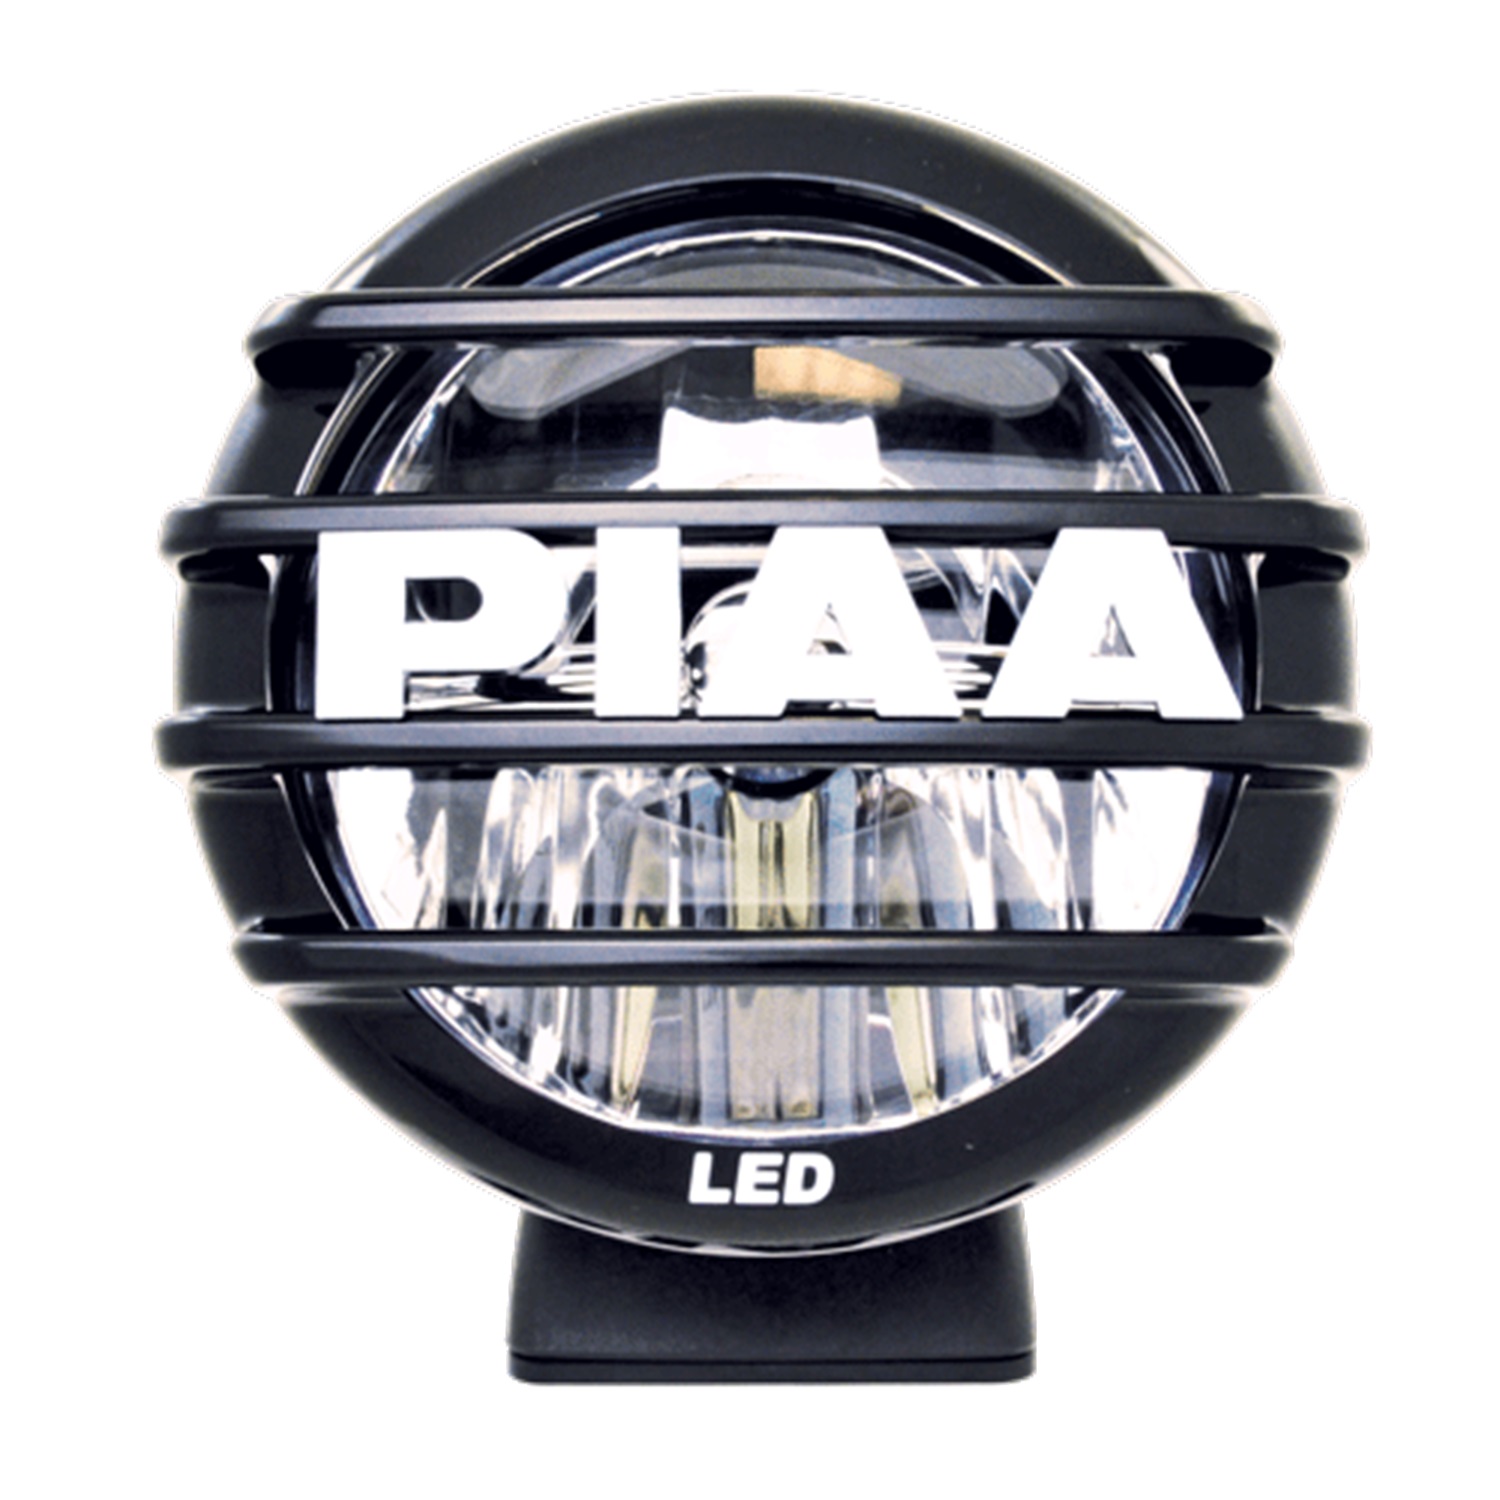 PIAA PIAA 73552 LED Driving Lamp Kit